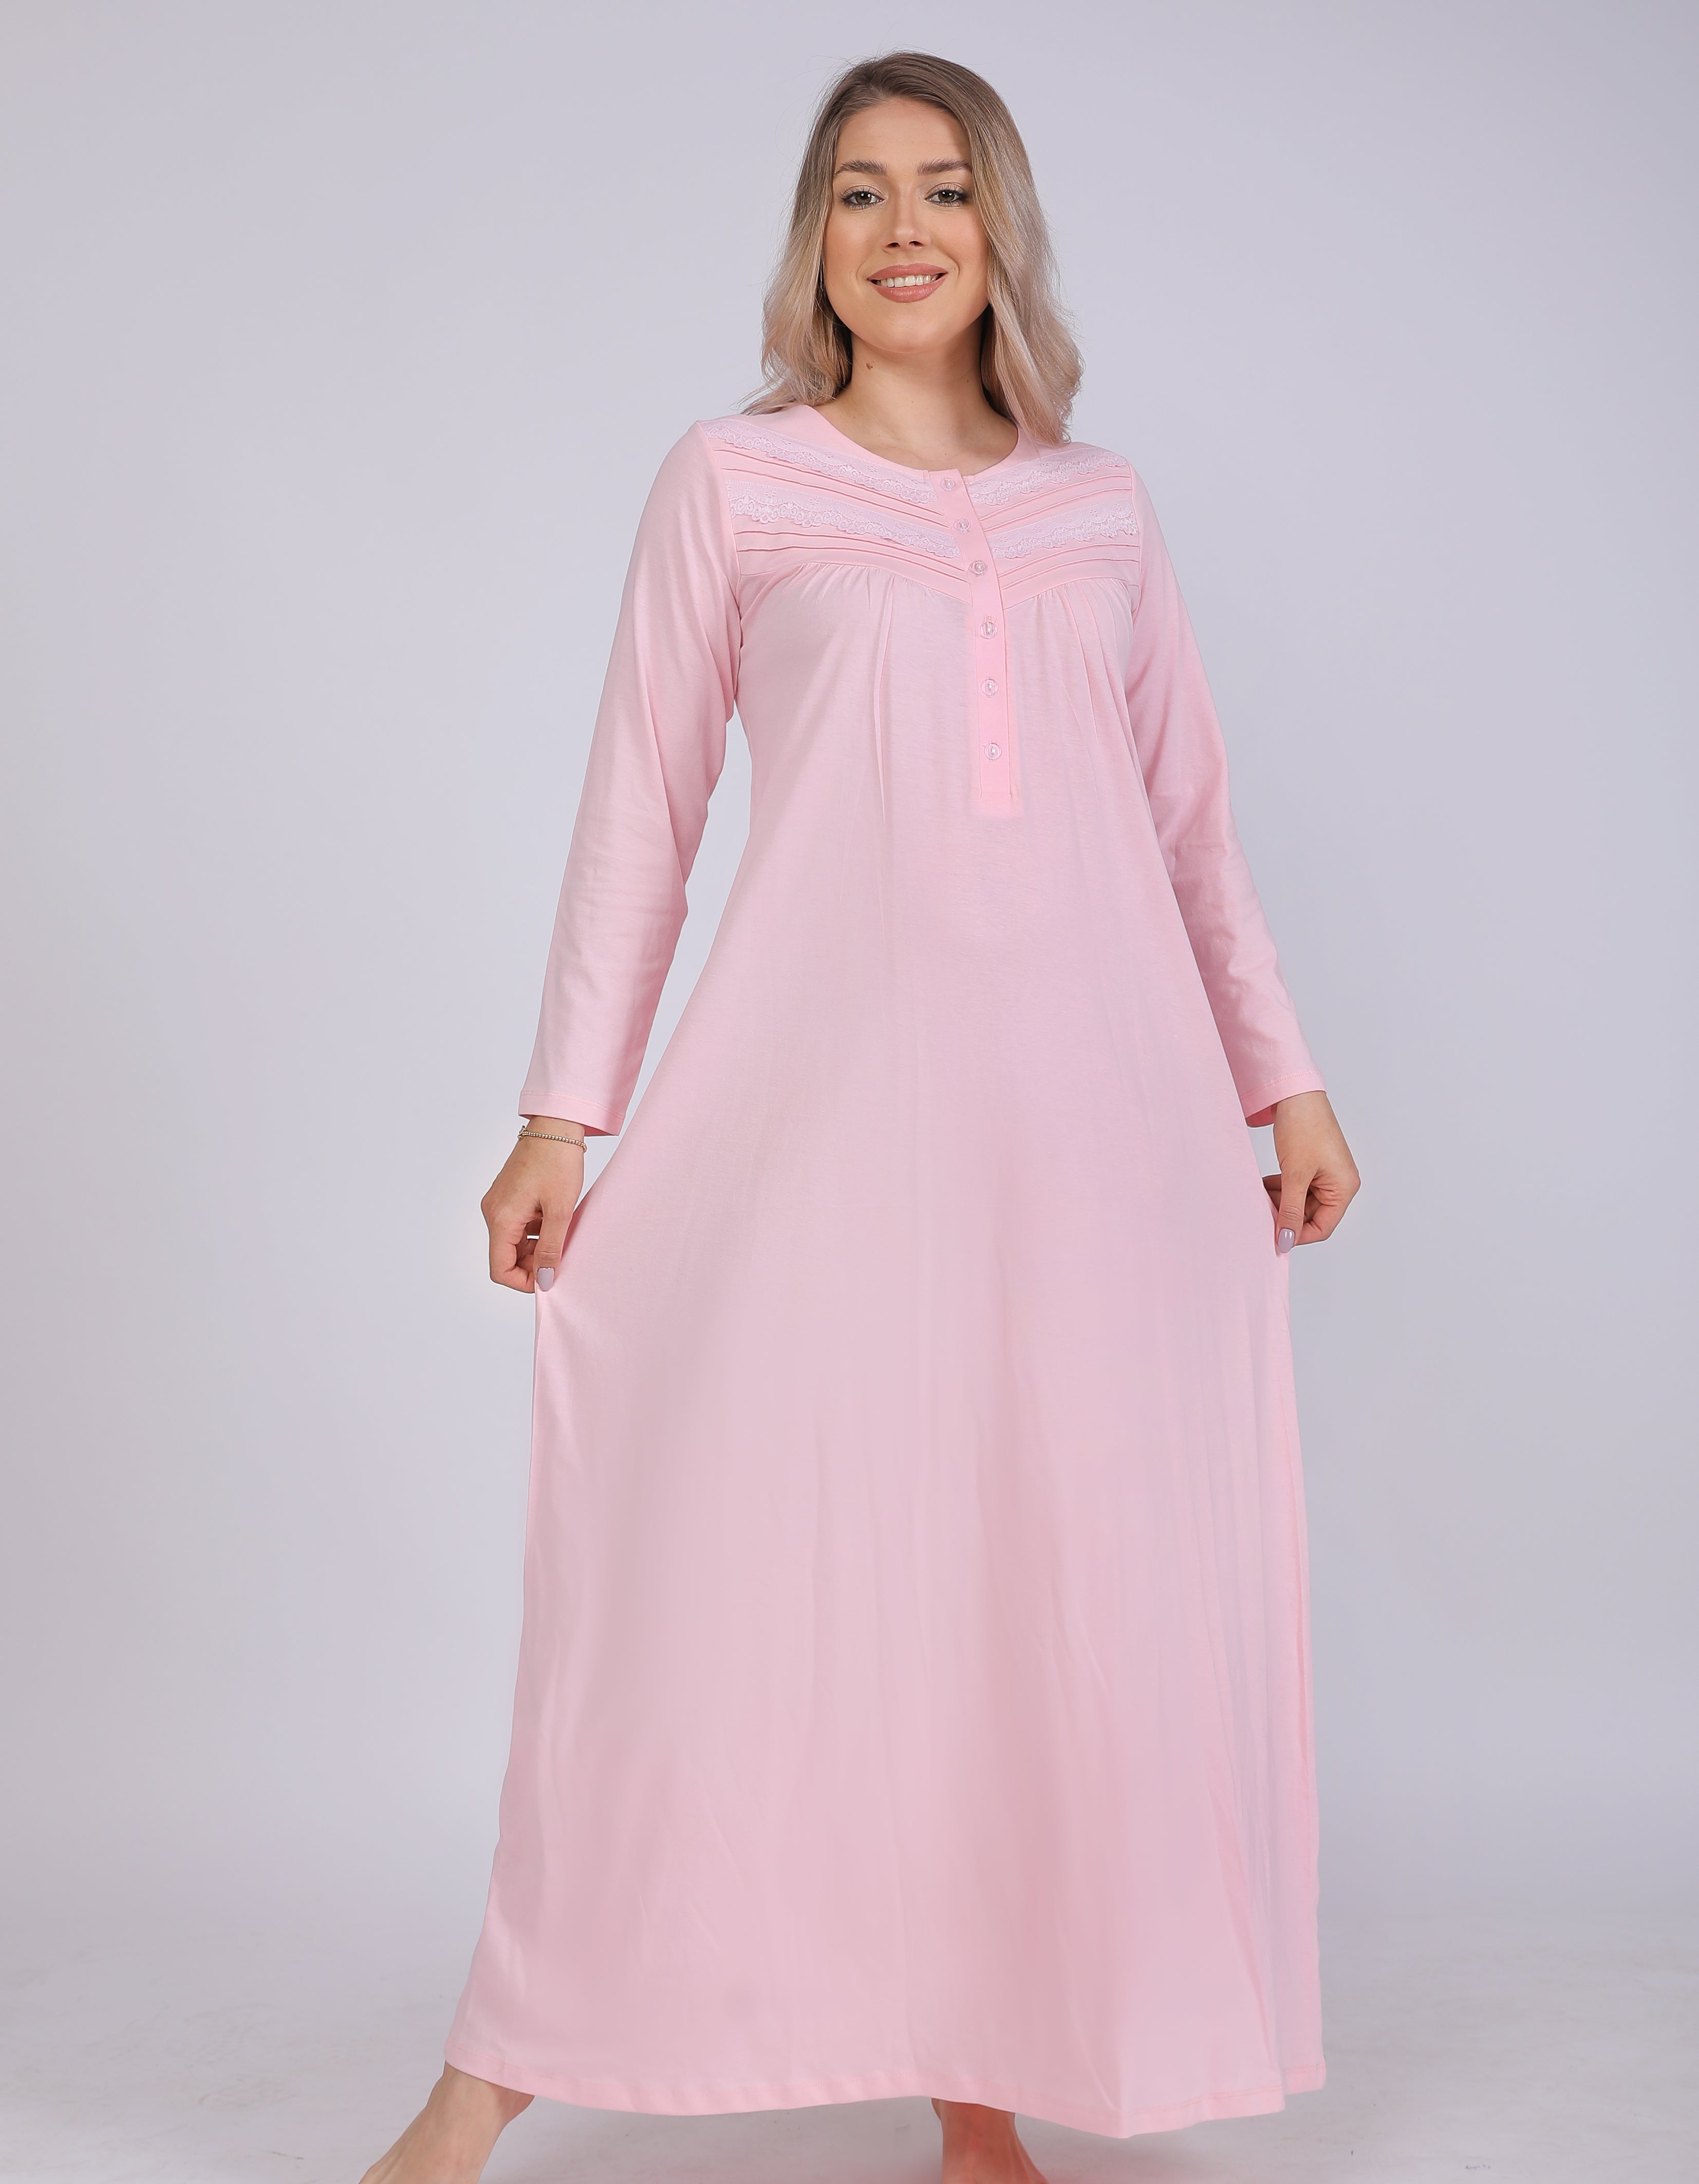 Long Sleeve Plain Nightgown